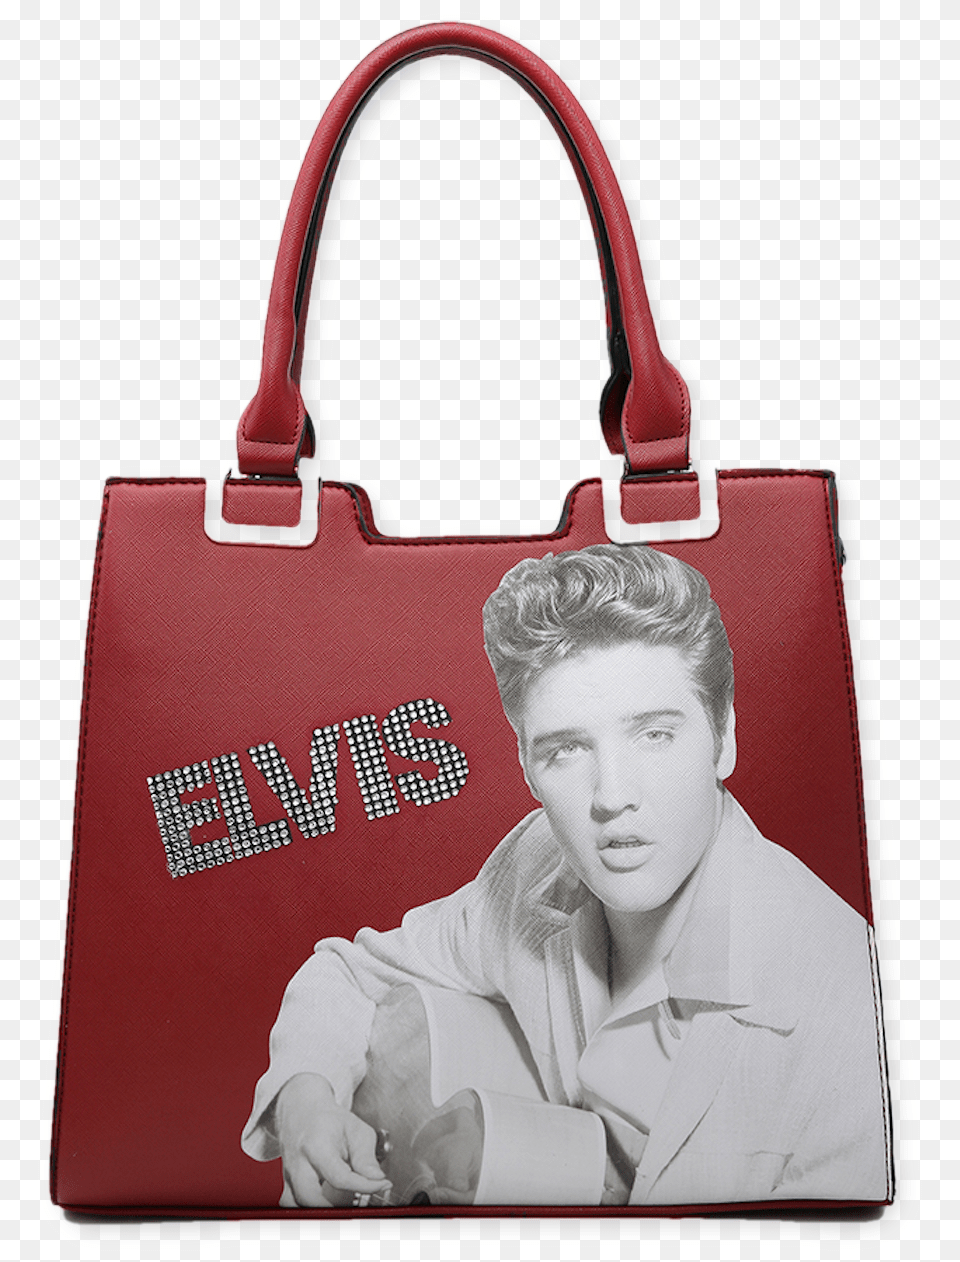 Elvis Presley Has Entered The Building Tote Bag, Accessories, Purse, Handbag, Adult Free Transparent Png